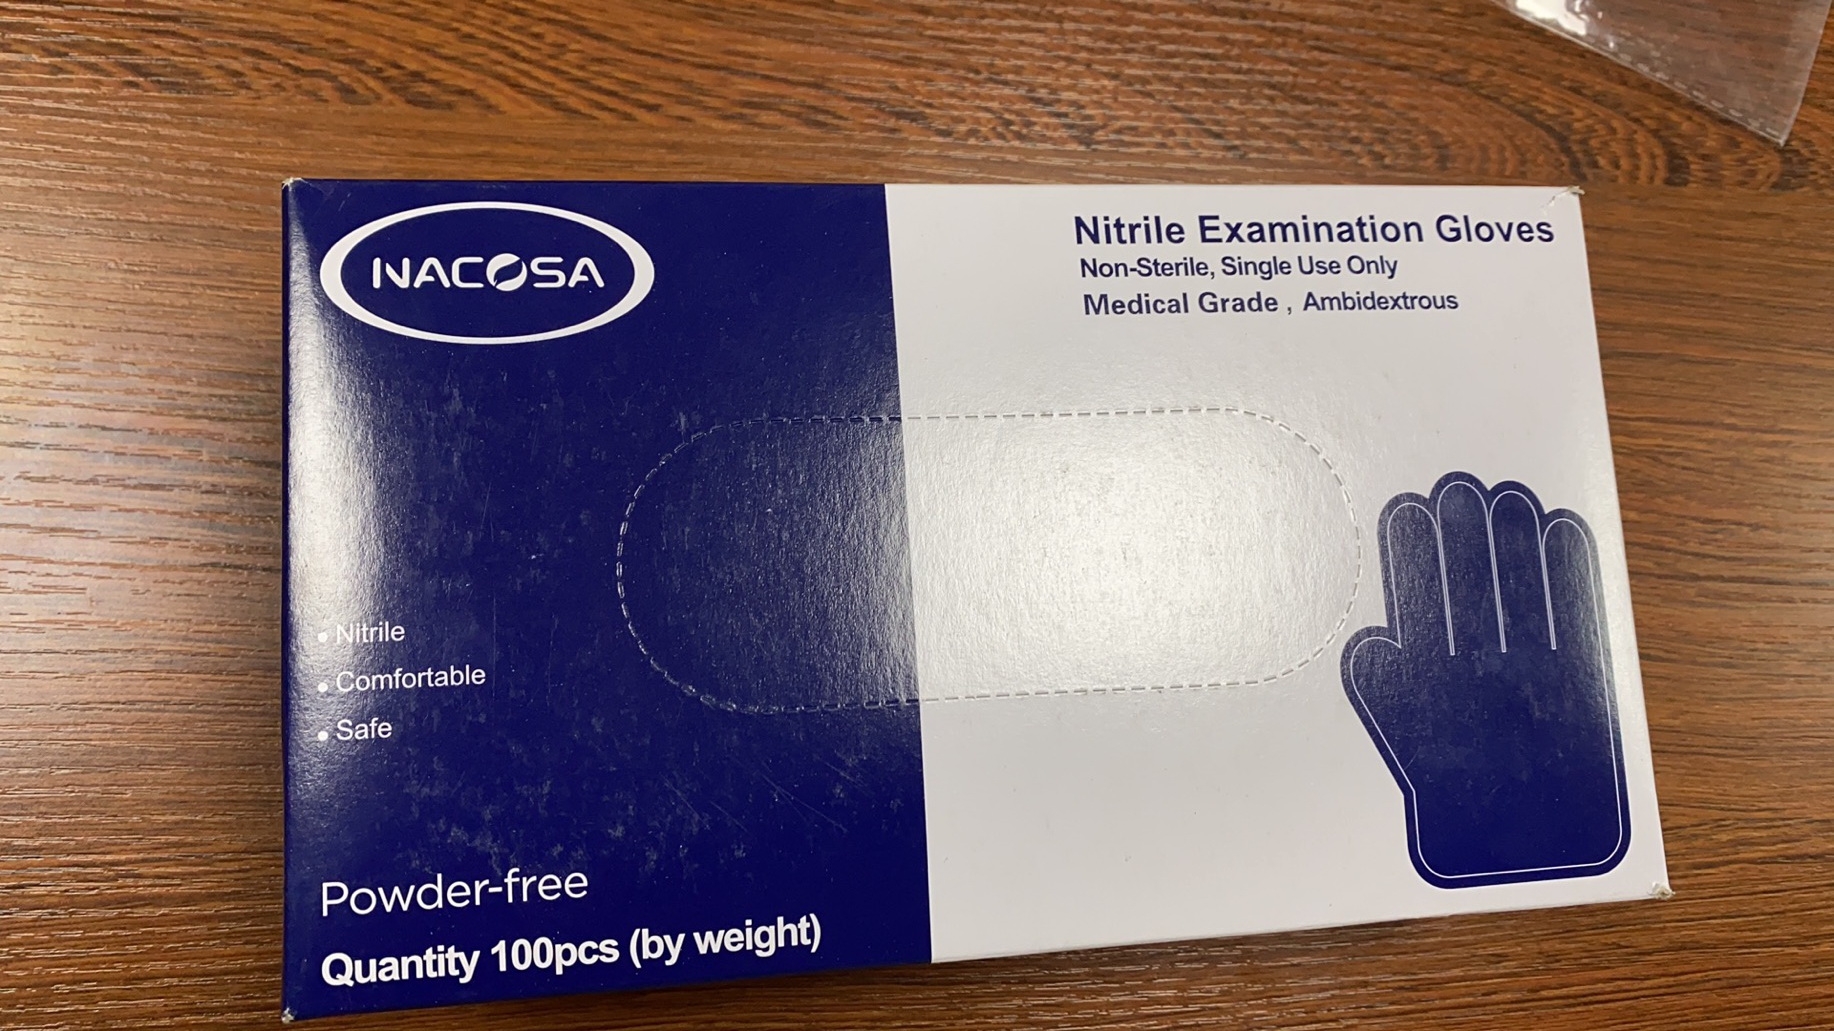 NACOSA Medical grade examination glove nitrile gloves FDA510k certificated OGT ready stock in New York